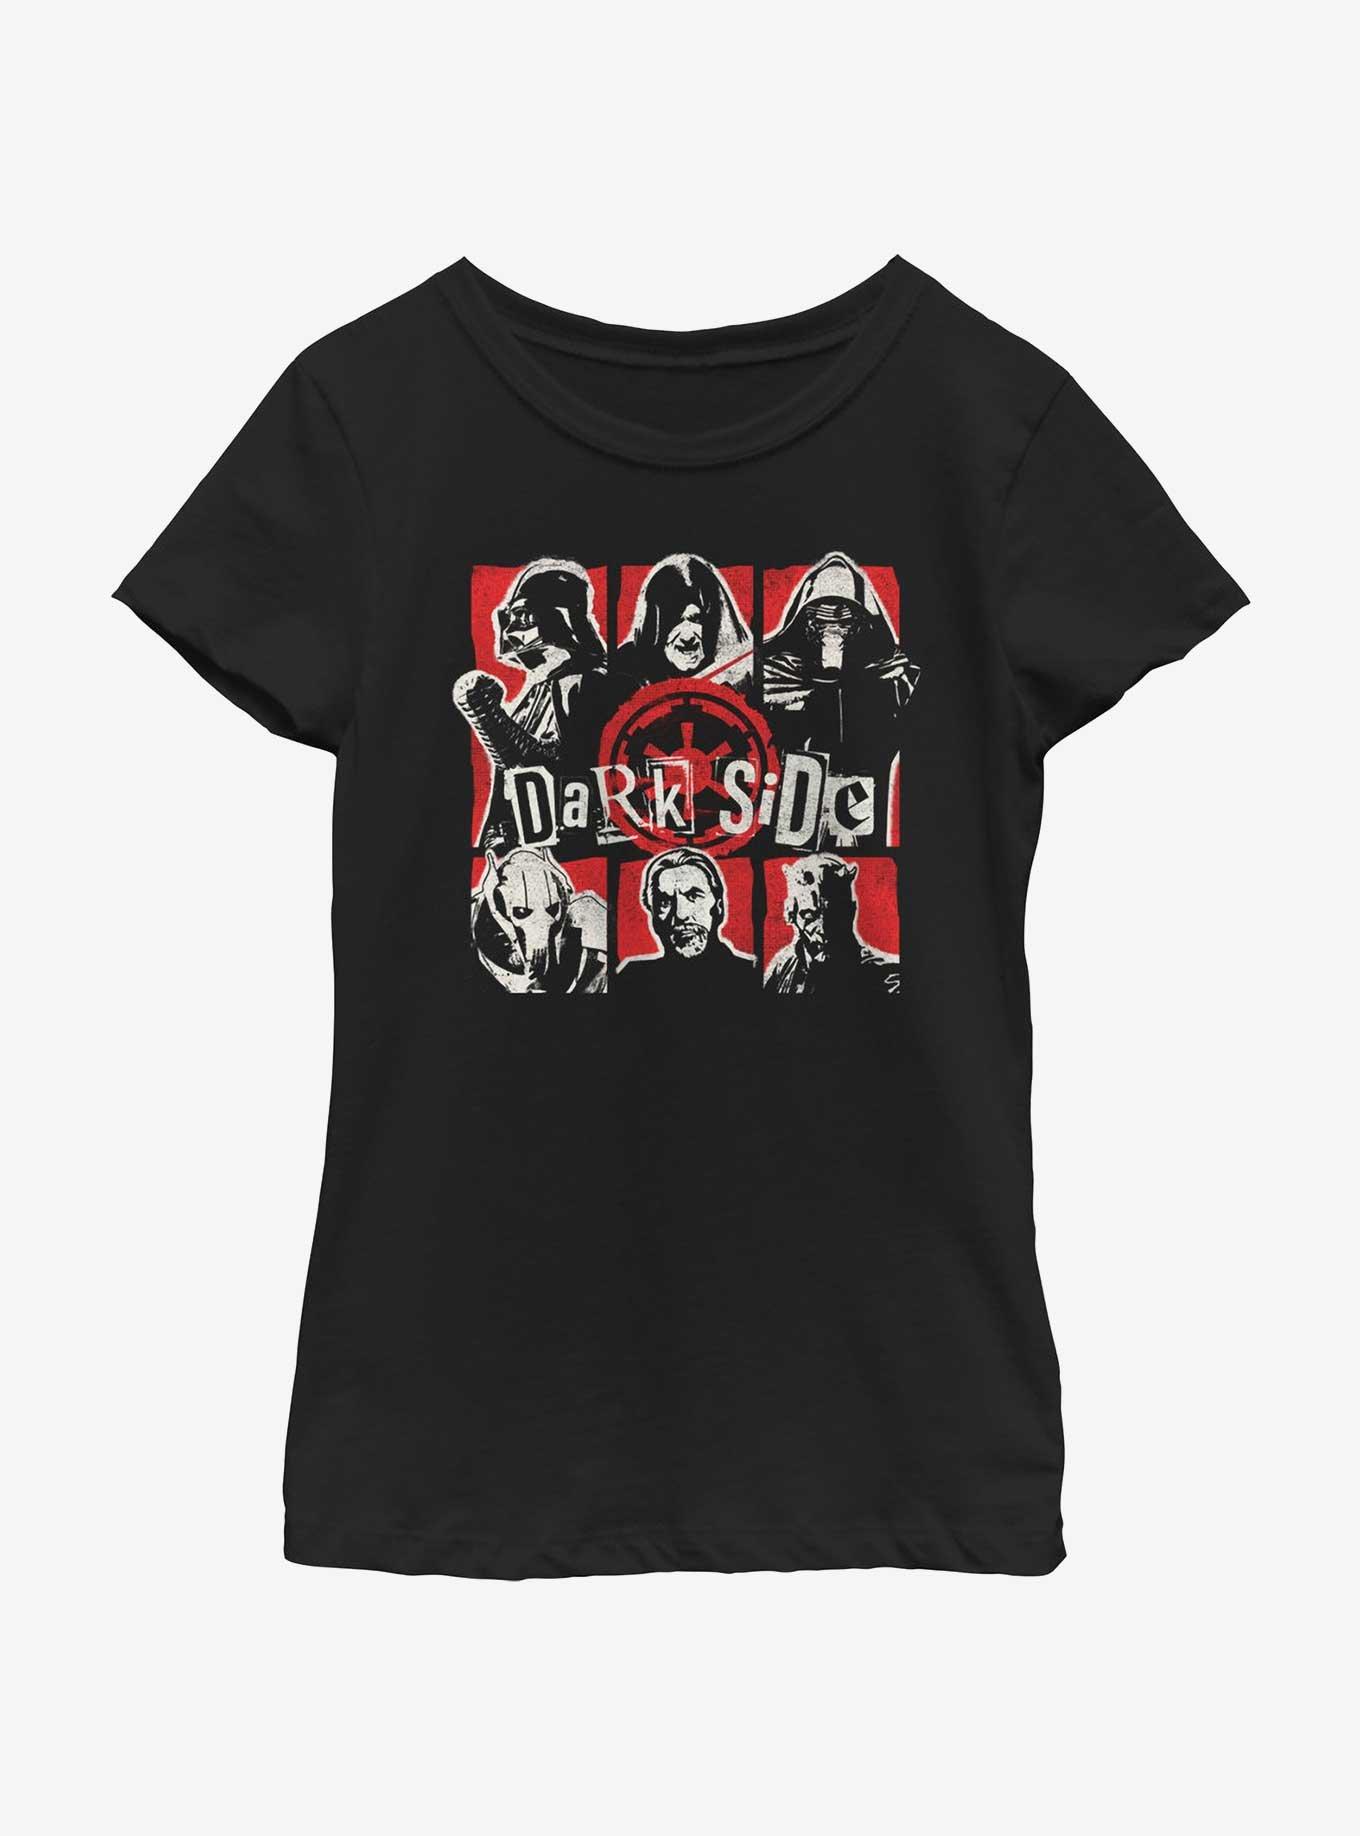 Star Wars Dark Side Grid Youth Girls T-Shirt, BLACK, hi-res